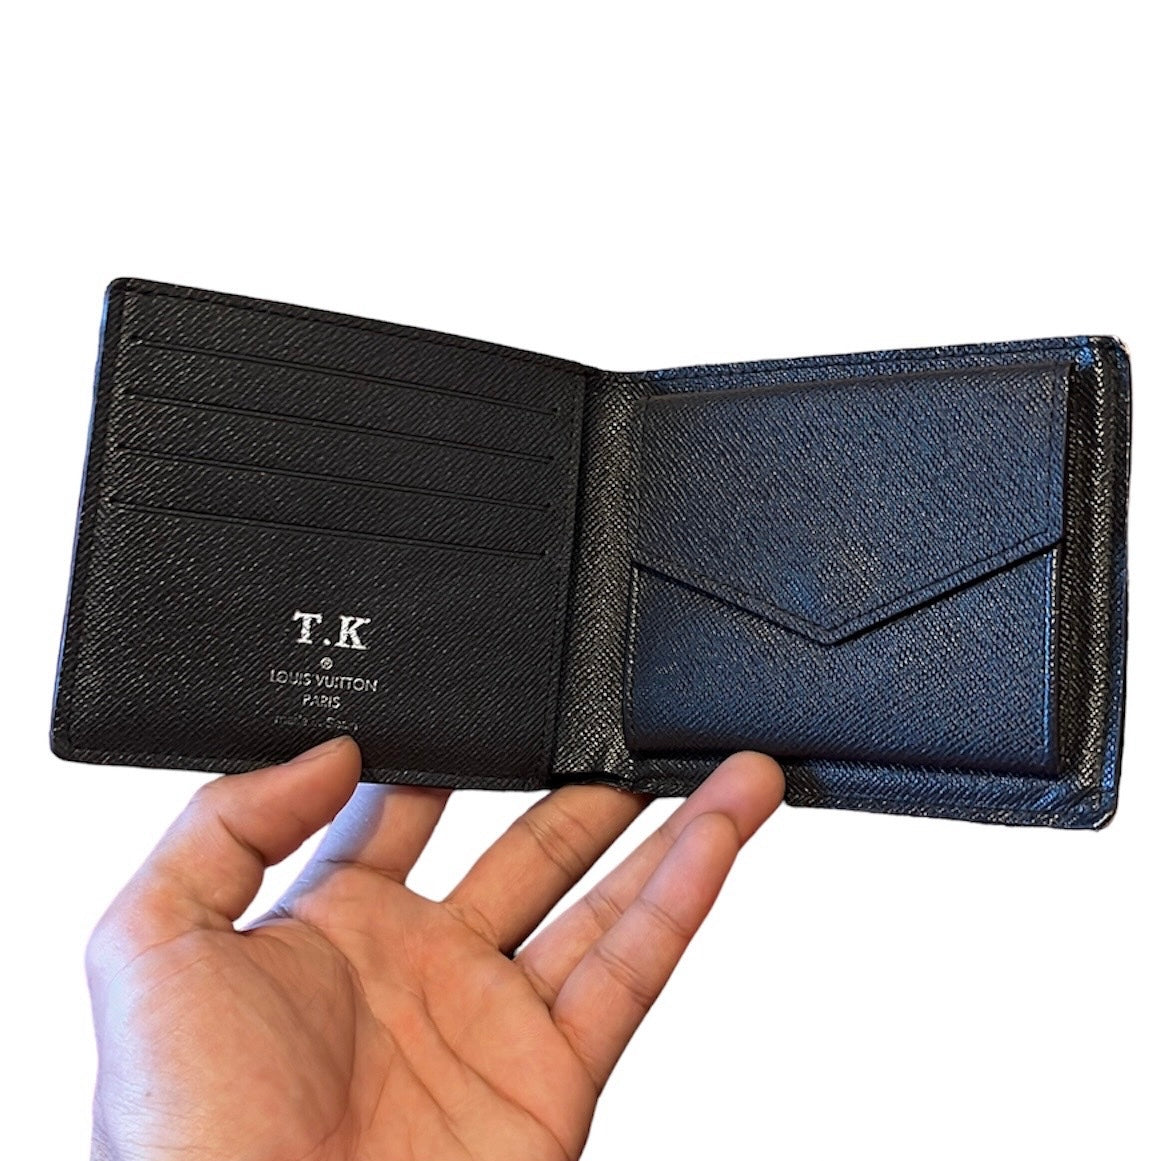 2017 Louis Vuitton x Chapman brothers wallet